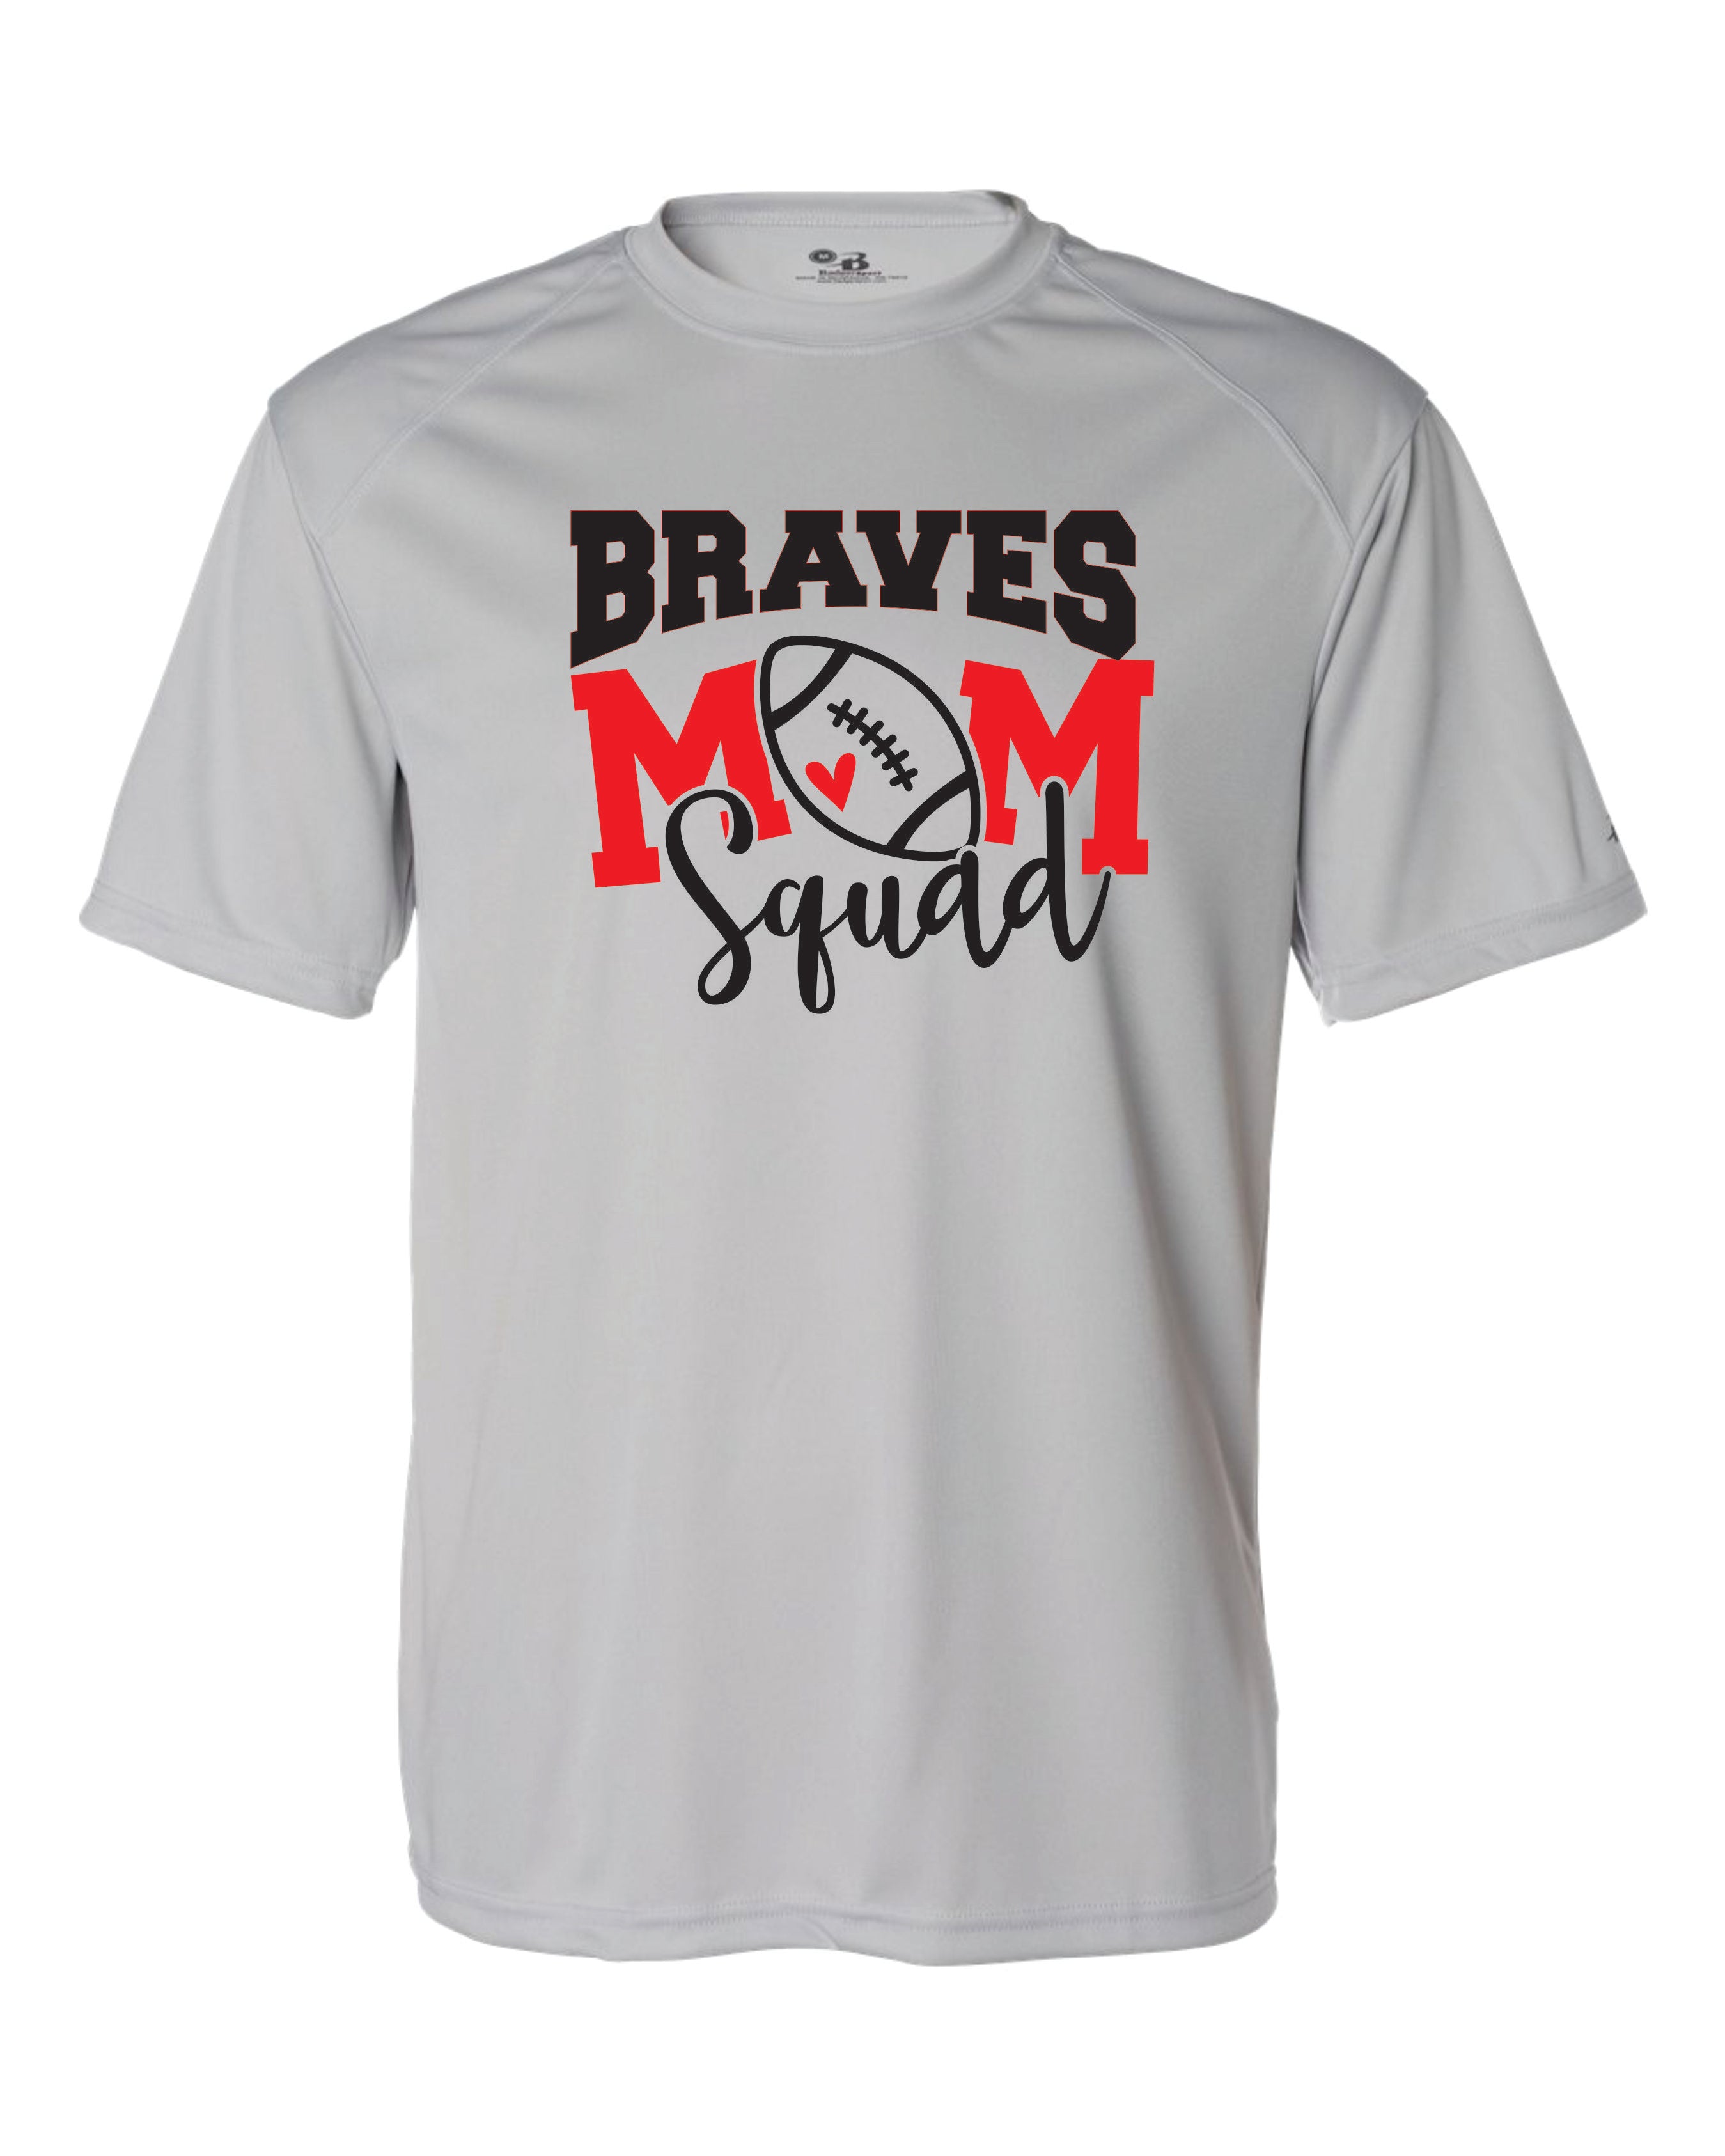 Mechanicsville Braves Badger SS  WOMEN shirt-FOOTBALL MOM SQUAD